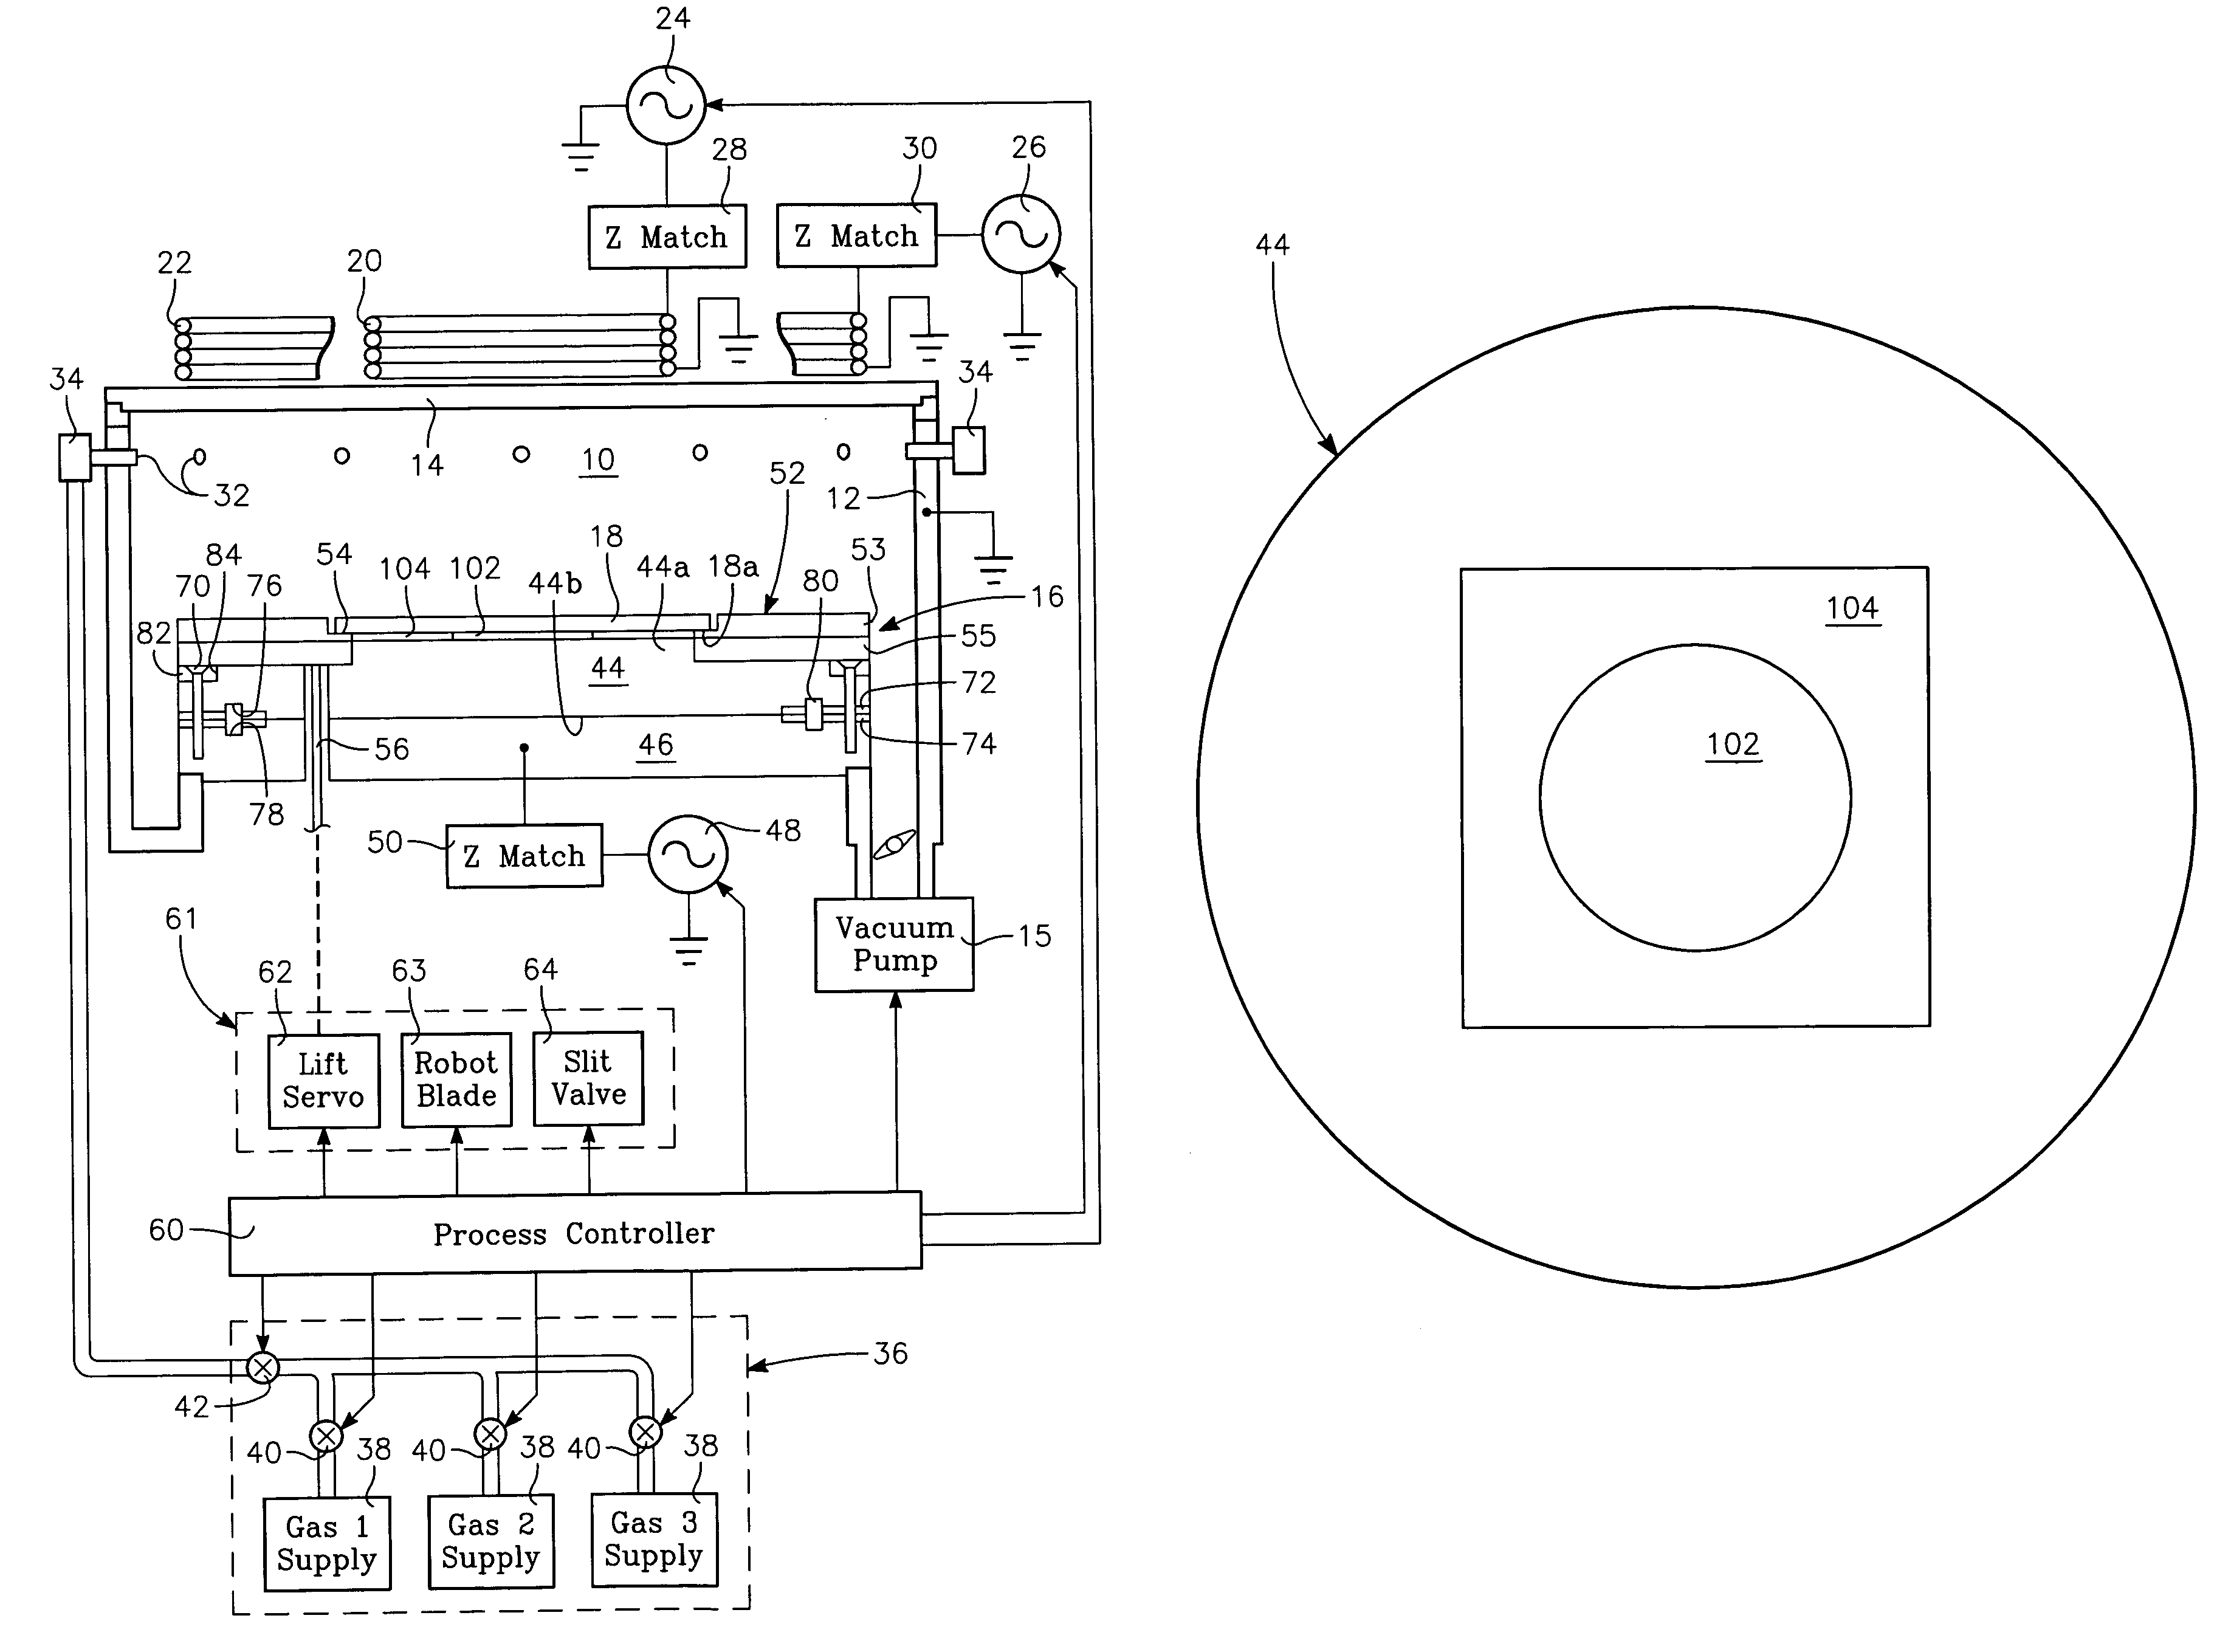 Mask etch plasma reactor with cathode providing a uniform distribution of etch rate